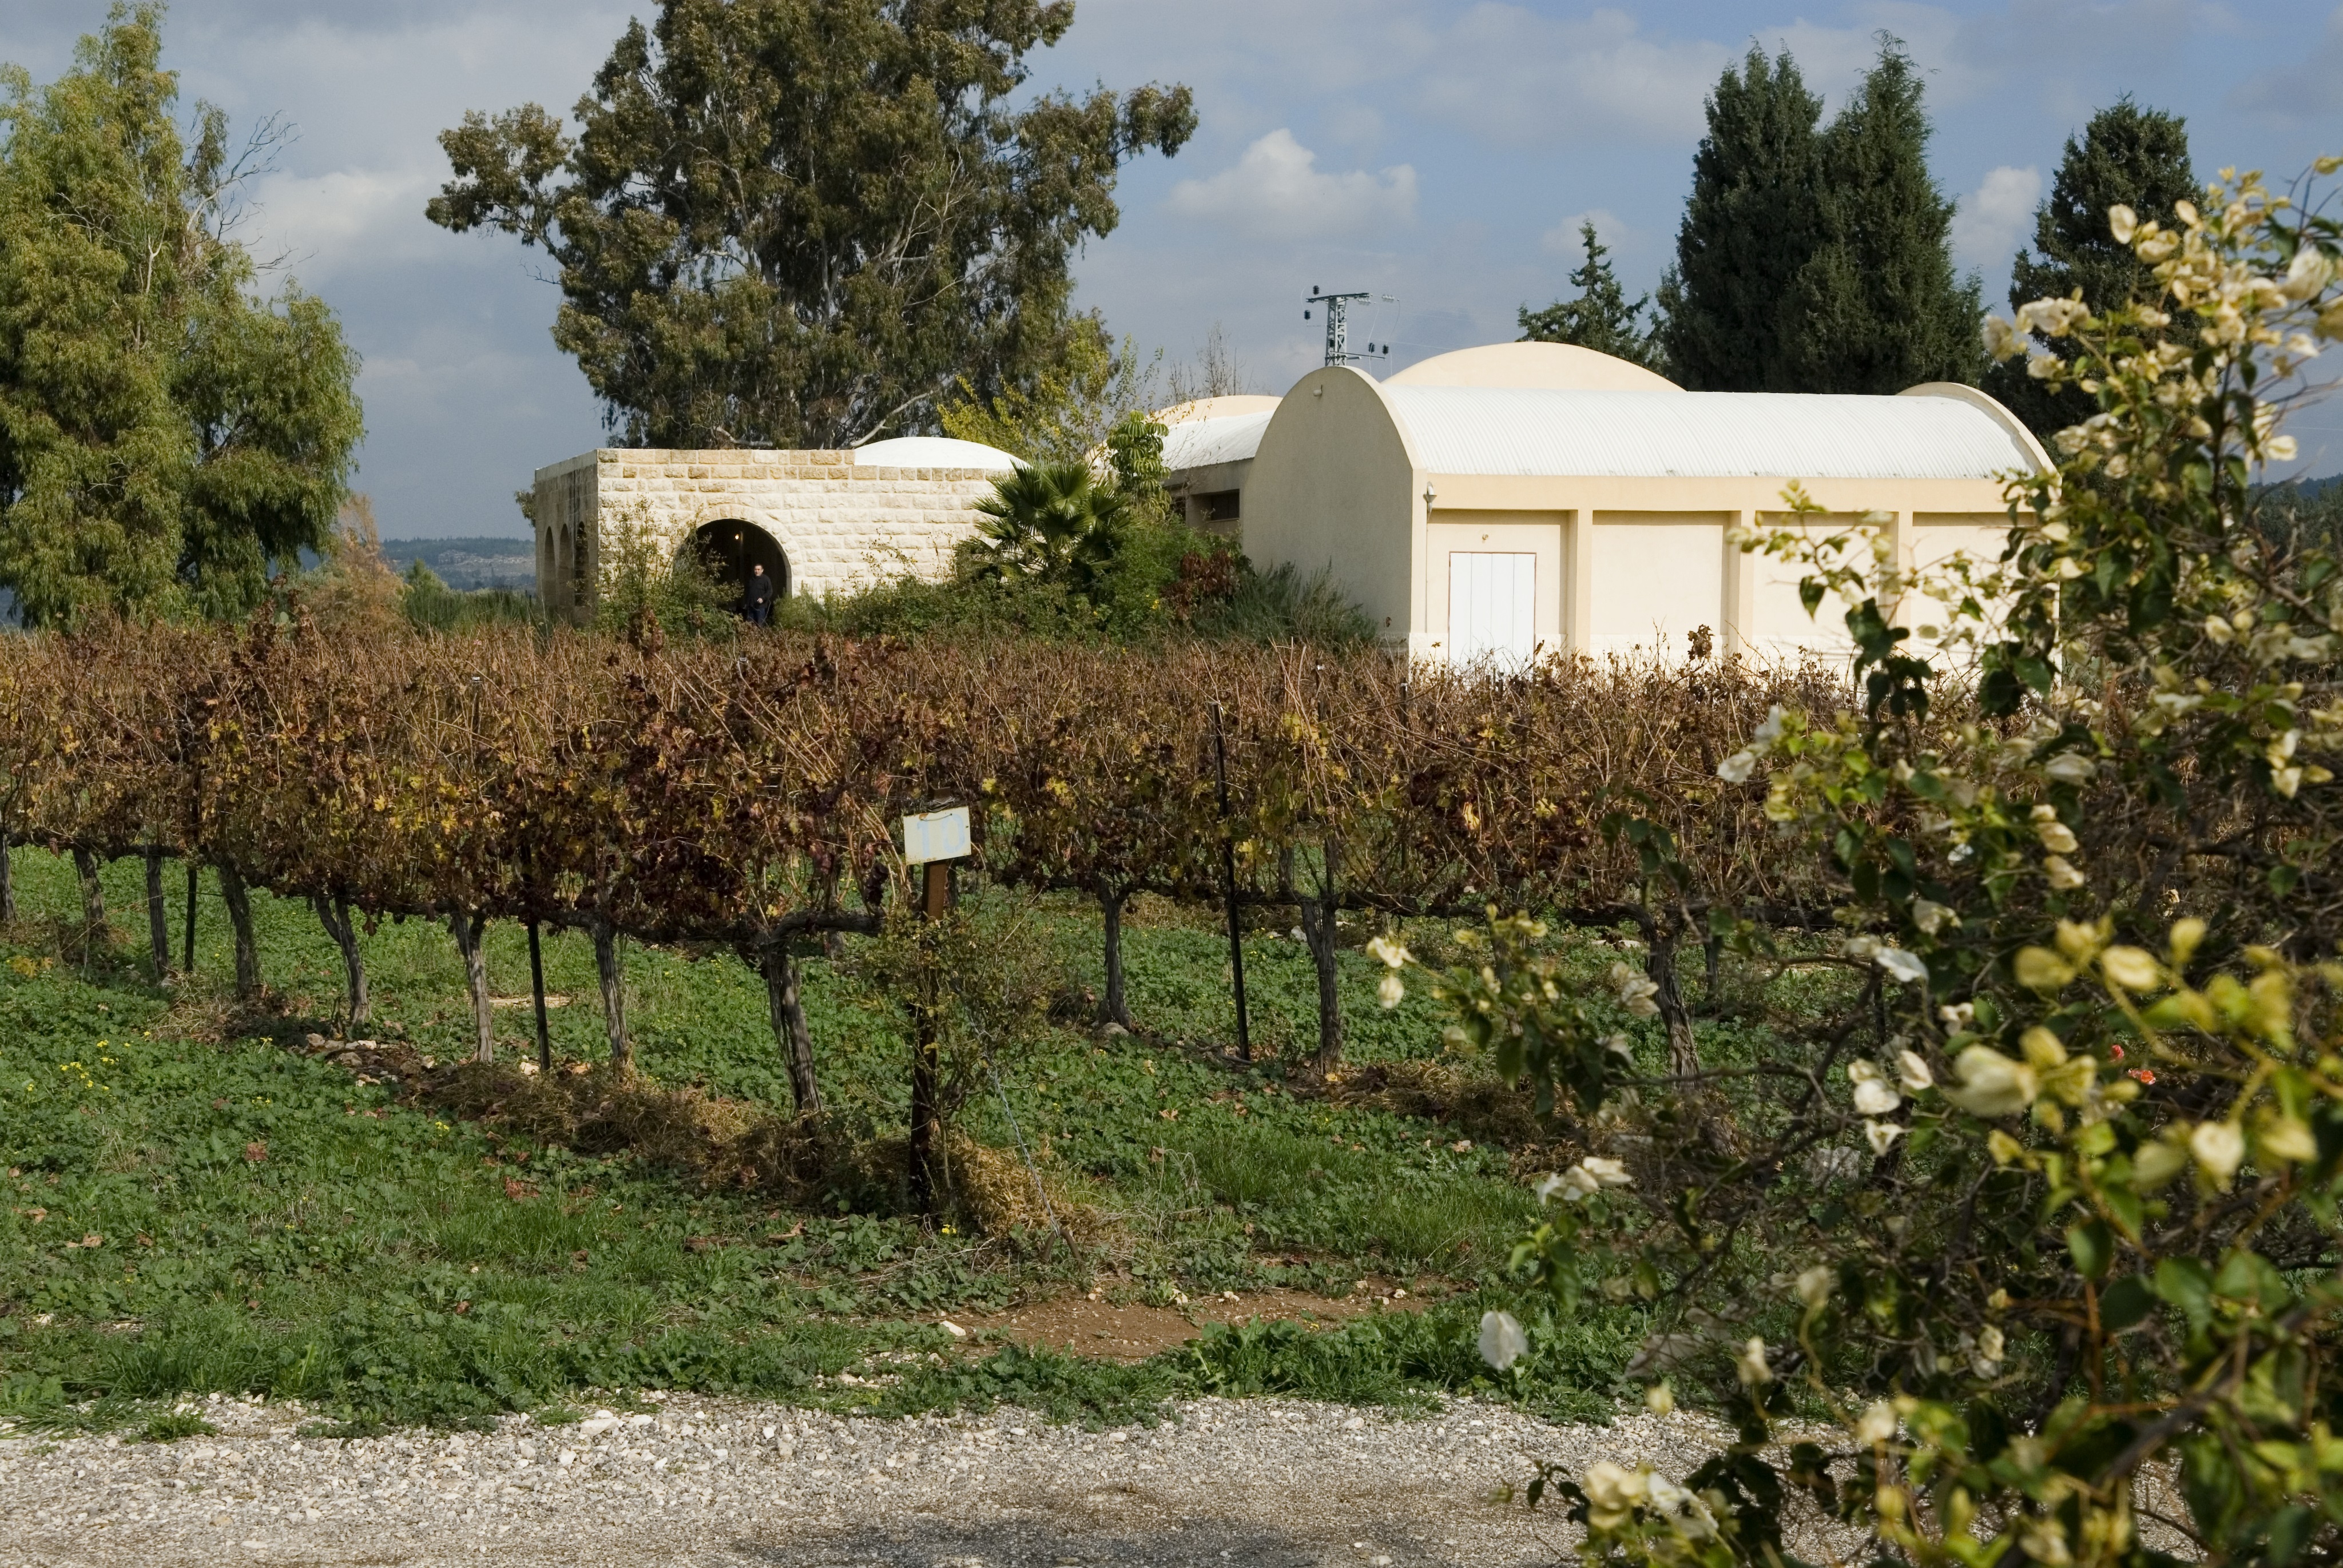 Clos de Gat - Har'el - Cabernet Sauvignon  Wine from Israël Red 2013